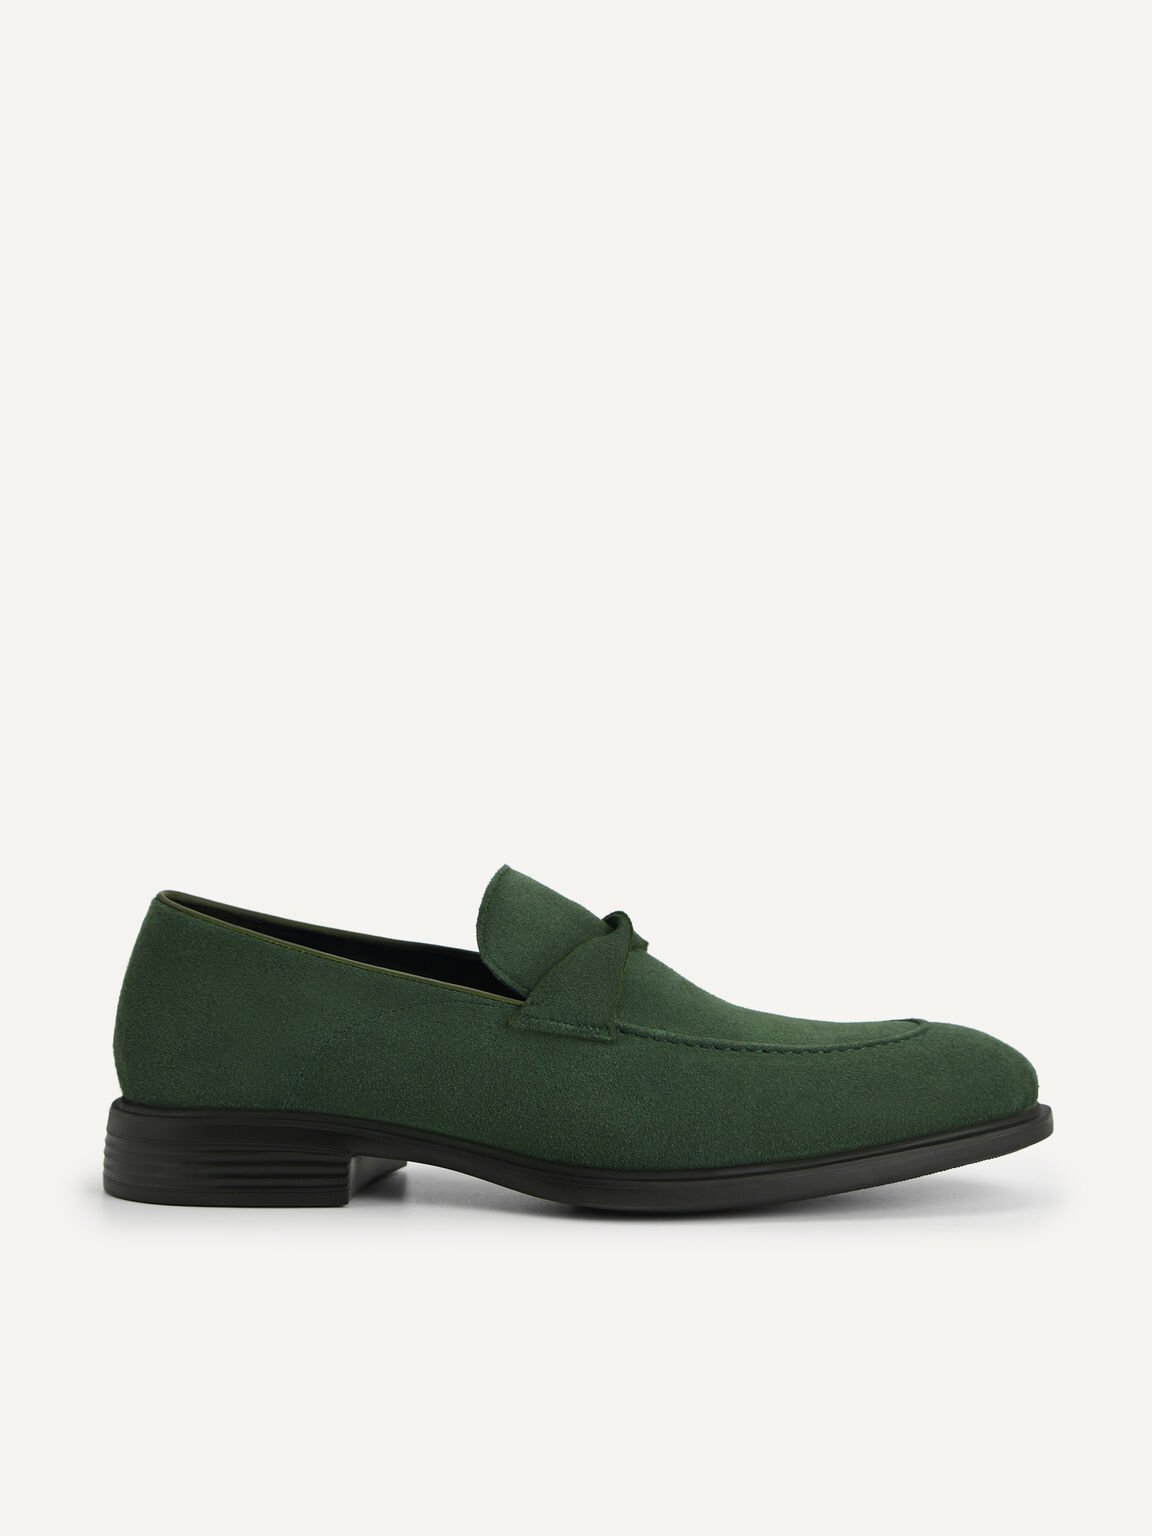 Altitude Lightweight Leather Loafers, Dark Green